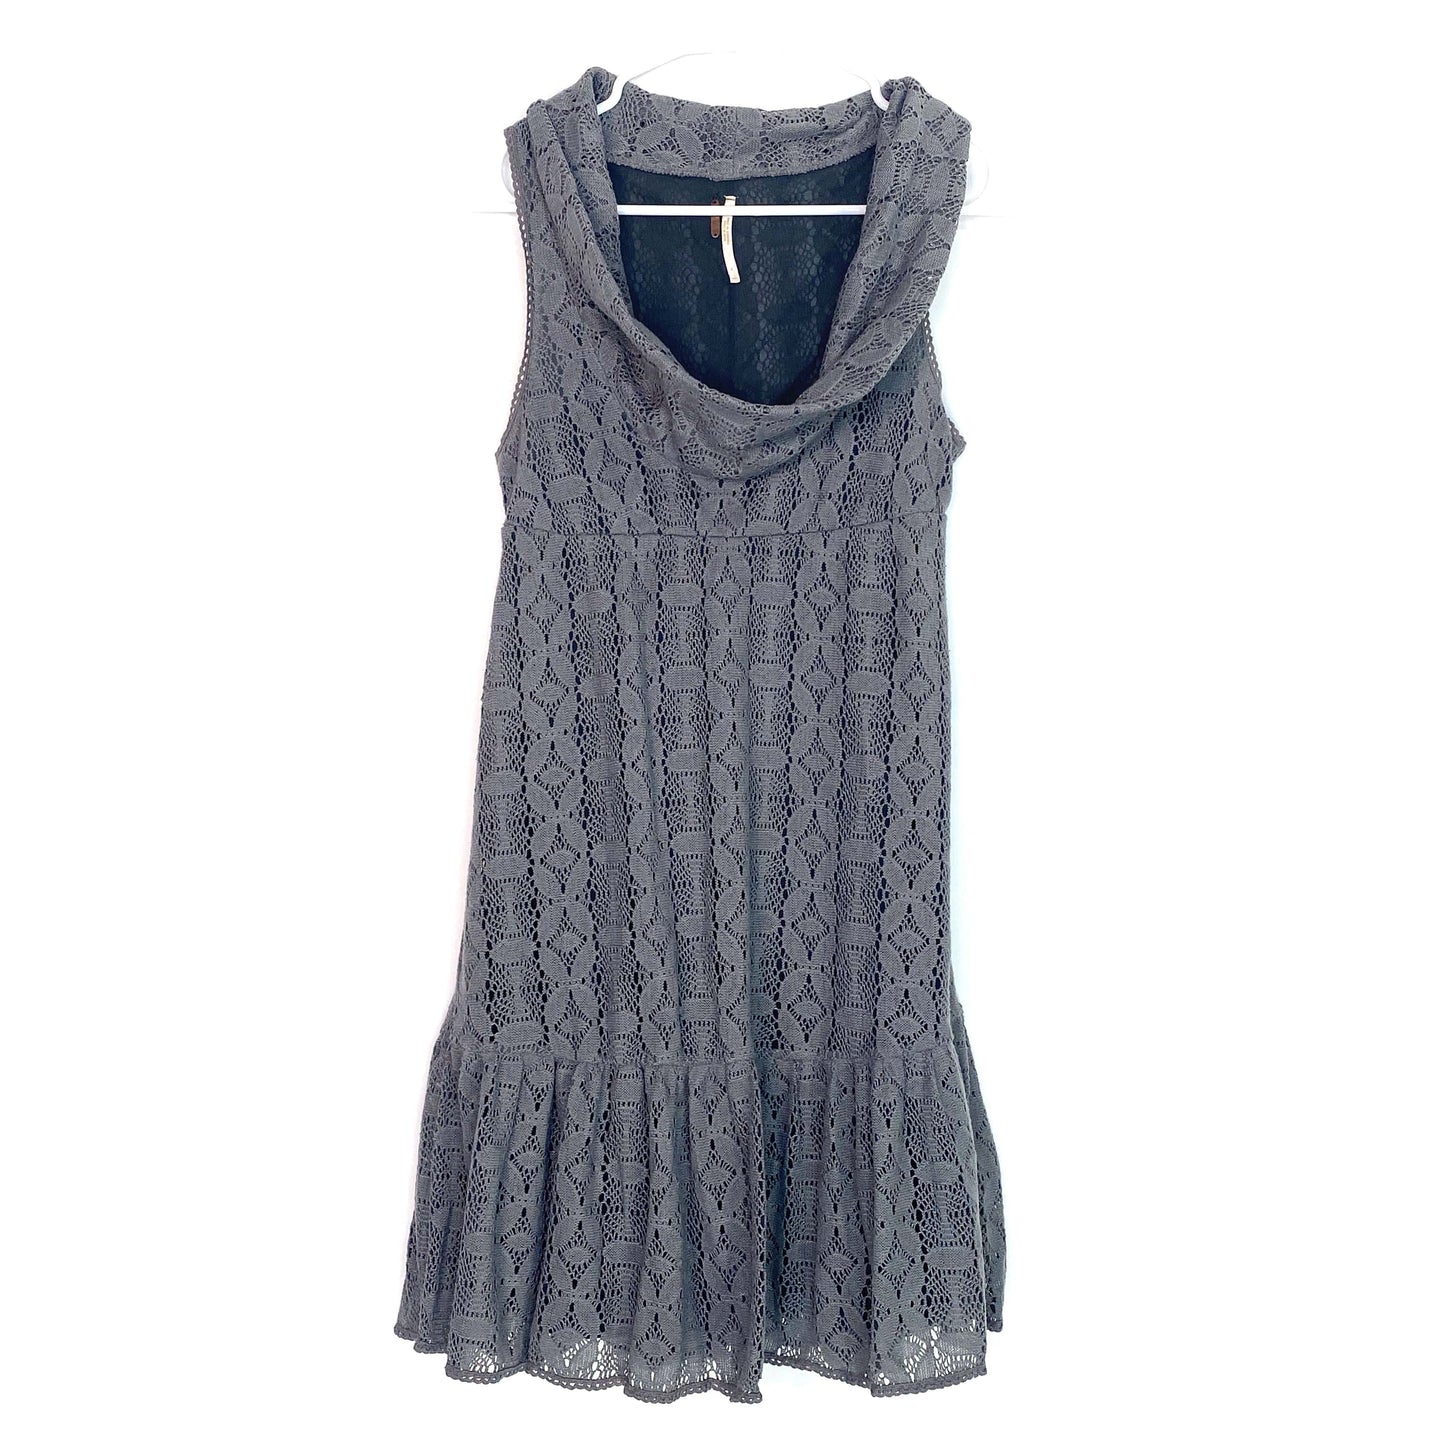 Effortless Free People Gray Crochet Knit Dress - Womens Size 4 - Fully Lined - Cowl Neck